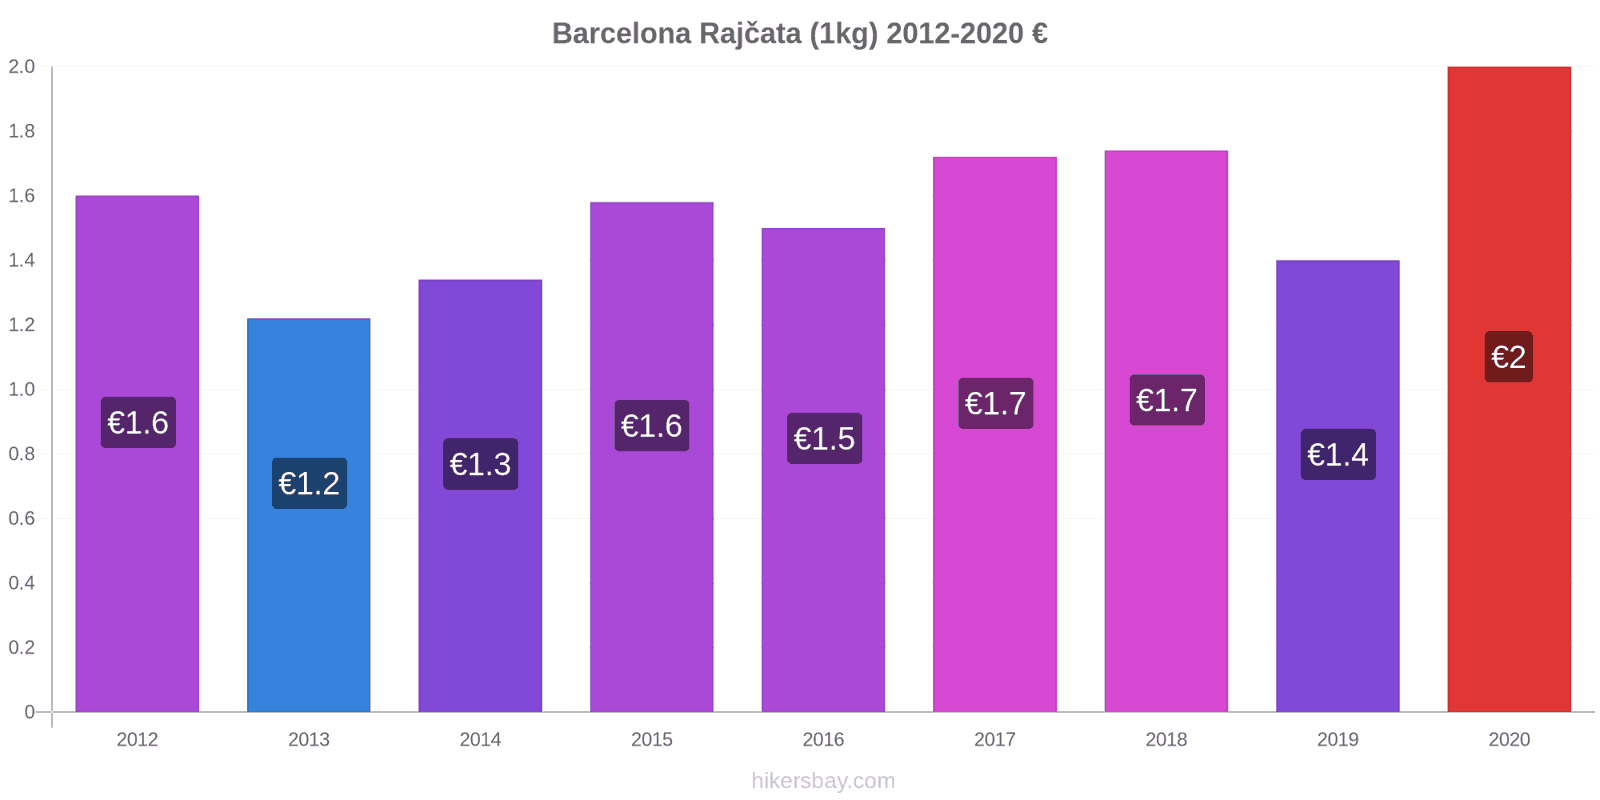 Barcelona změny cen Rajčata (1kg) hikersbay.com